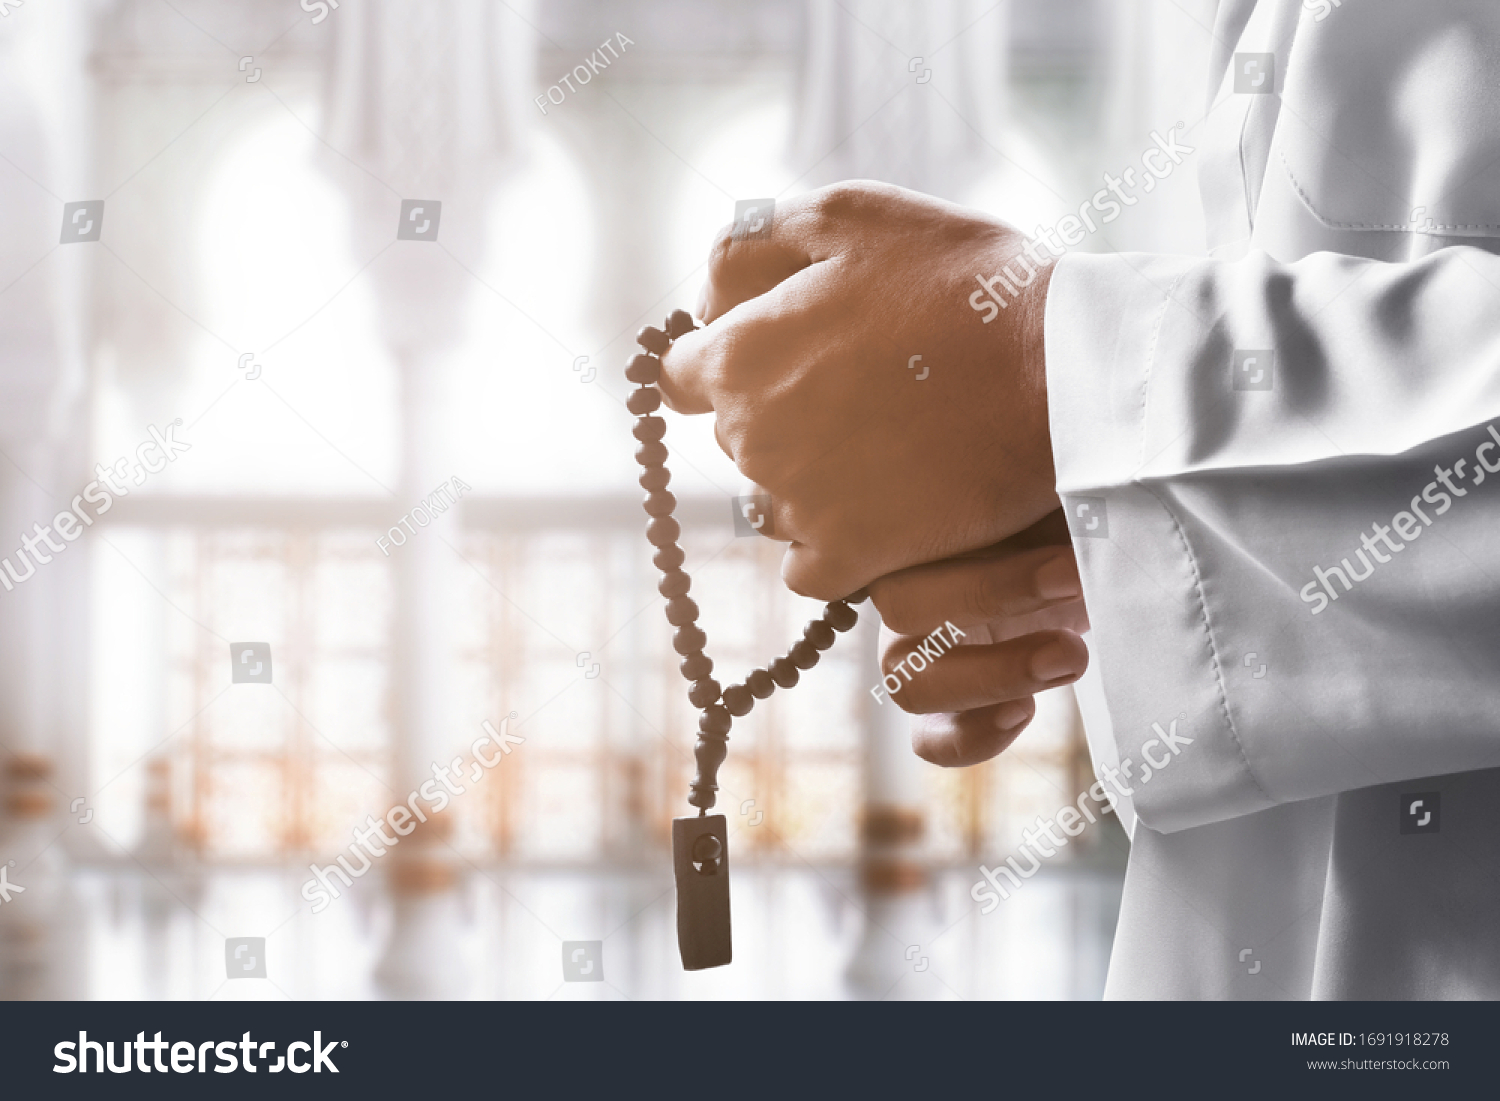 Religious muslim man praying with rosary beads #1691918278